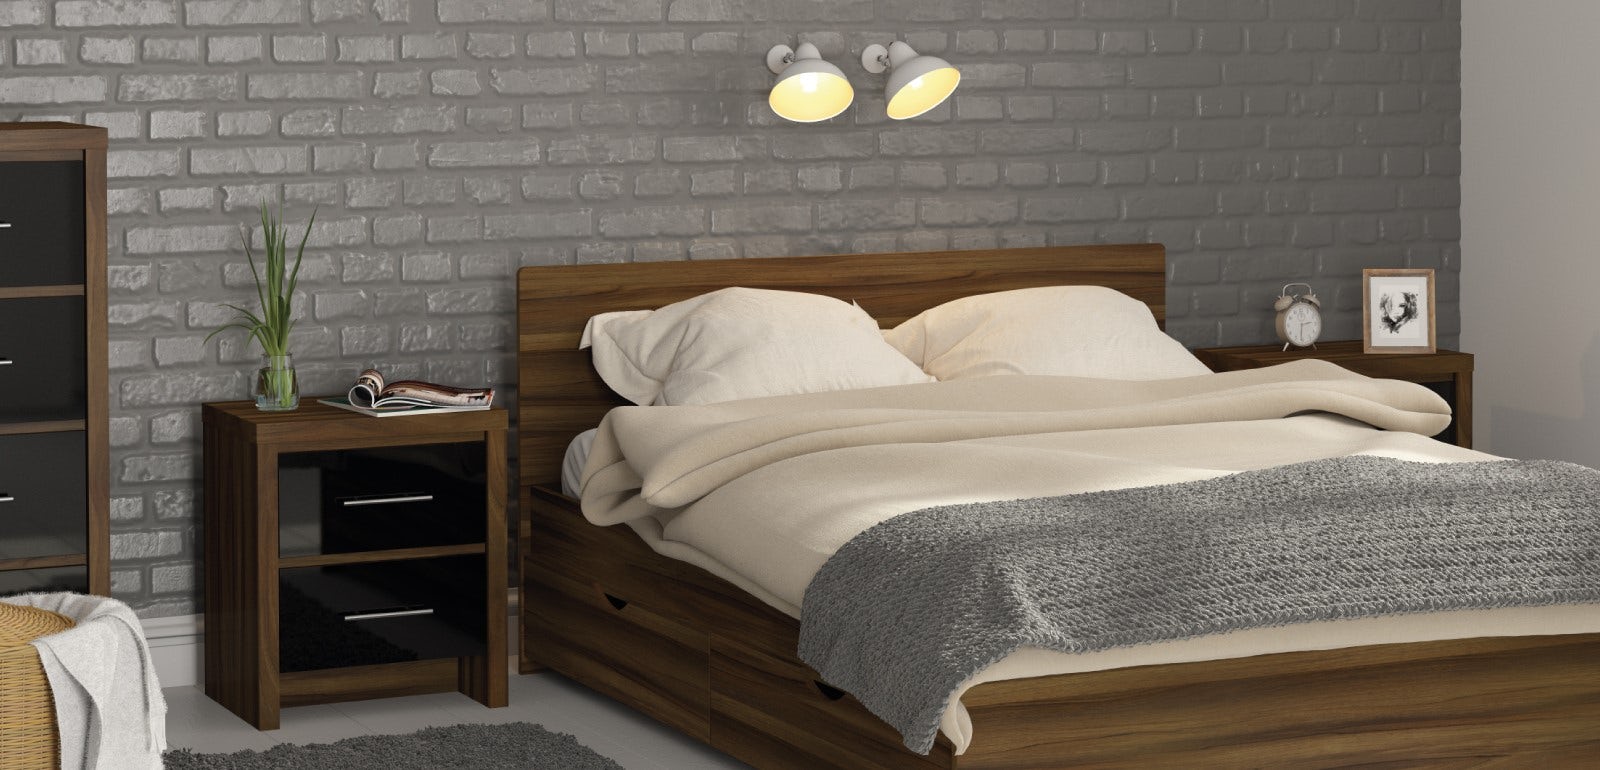 Male bedroom ideas | VictoriaPlum.com